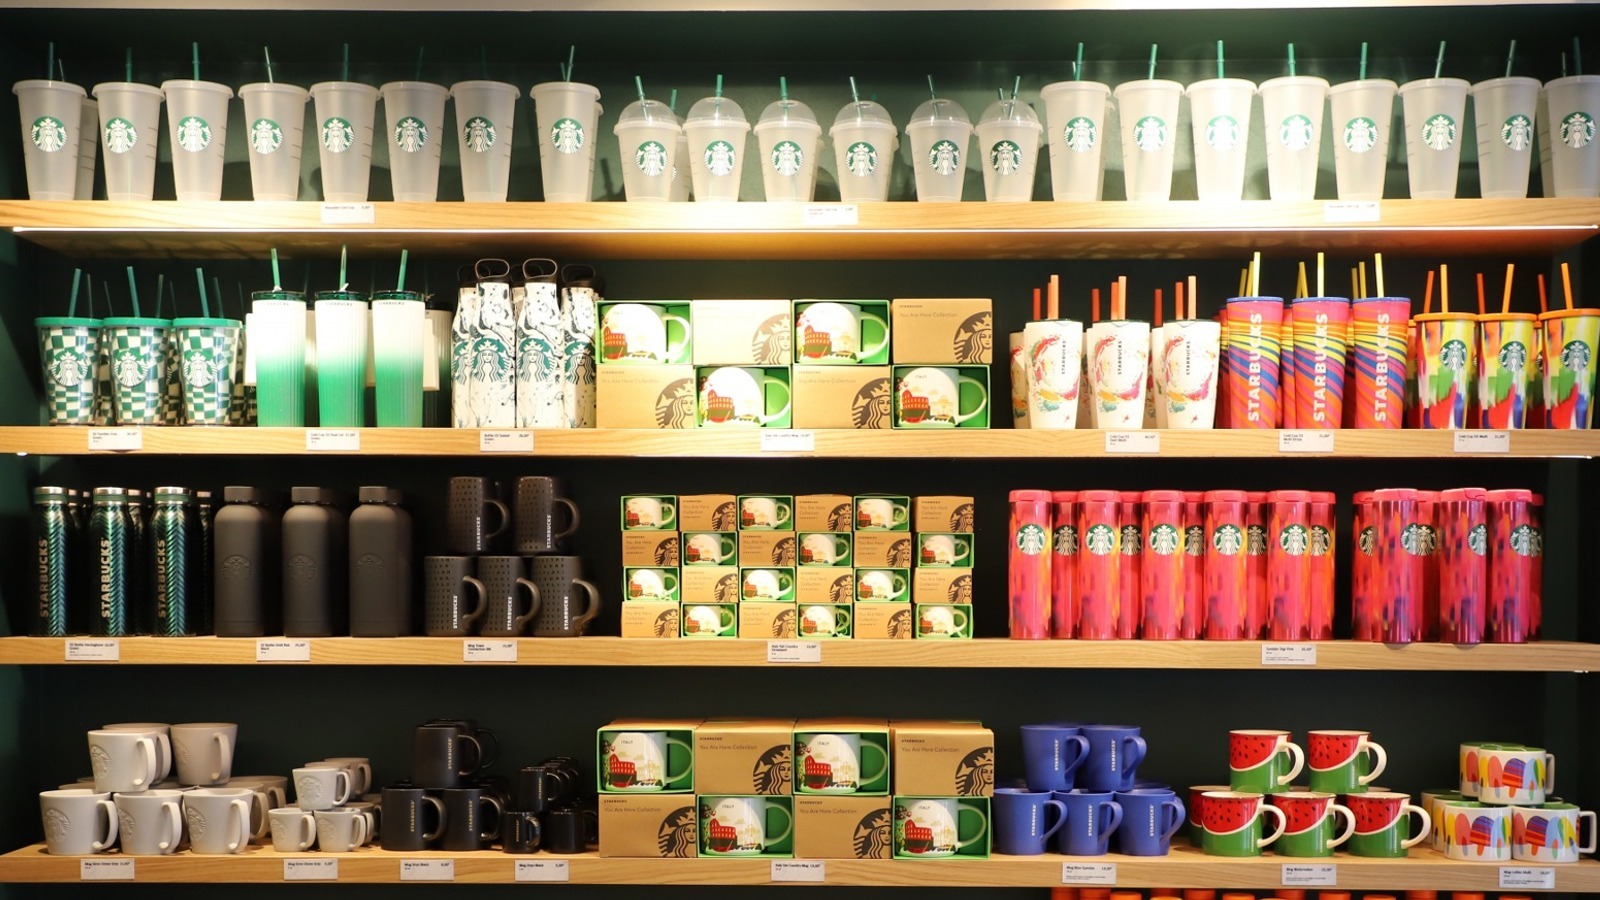 Shop Starbucks Coffee Gift Set online